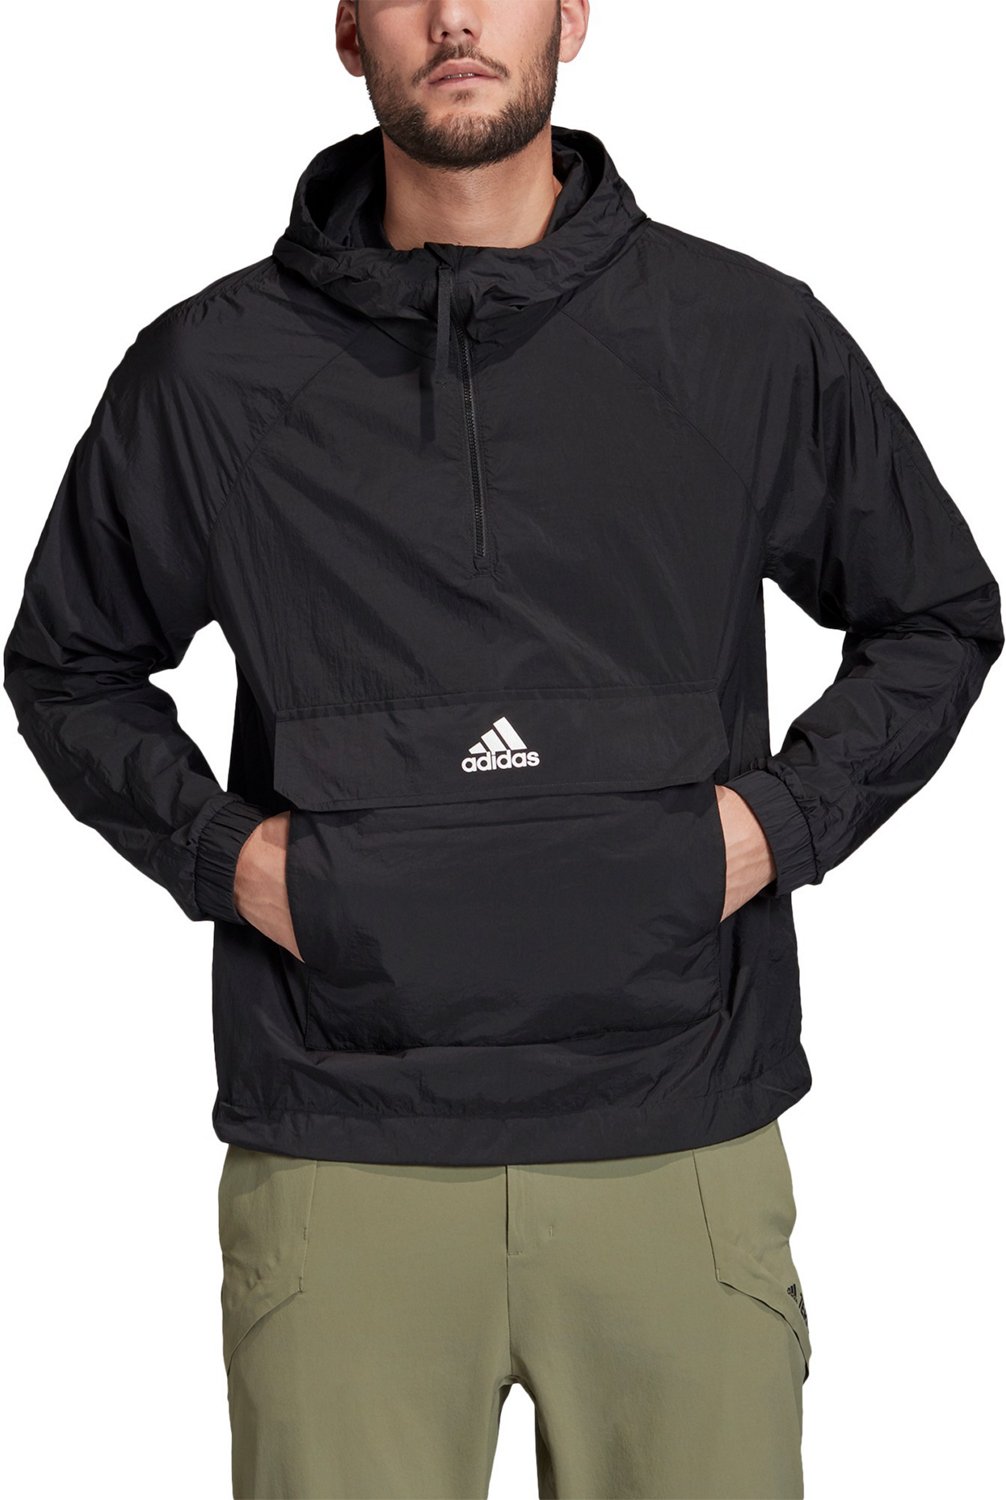 academy adidas jacket